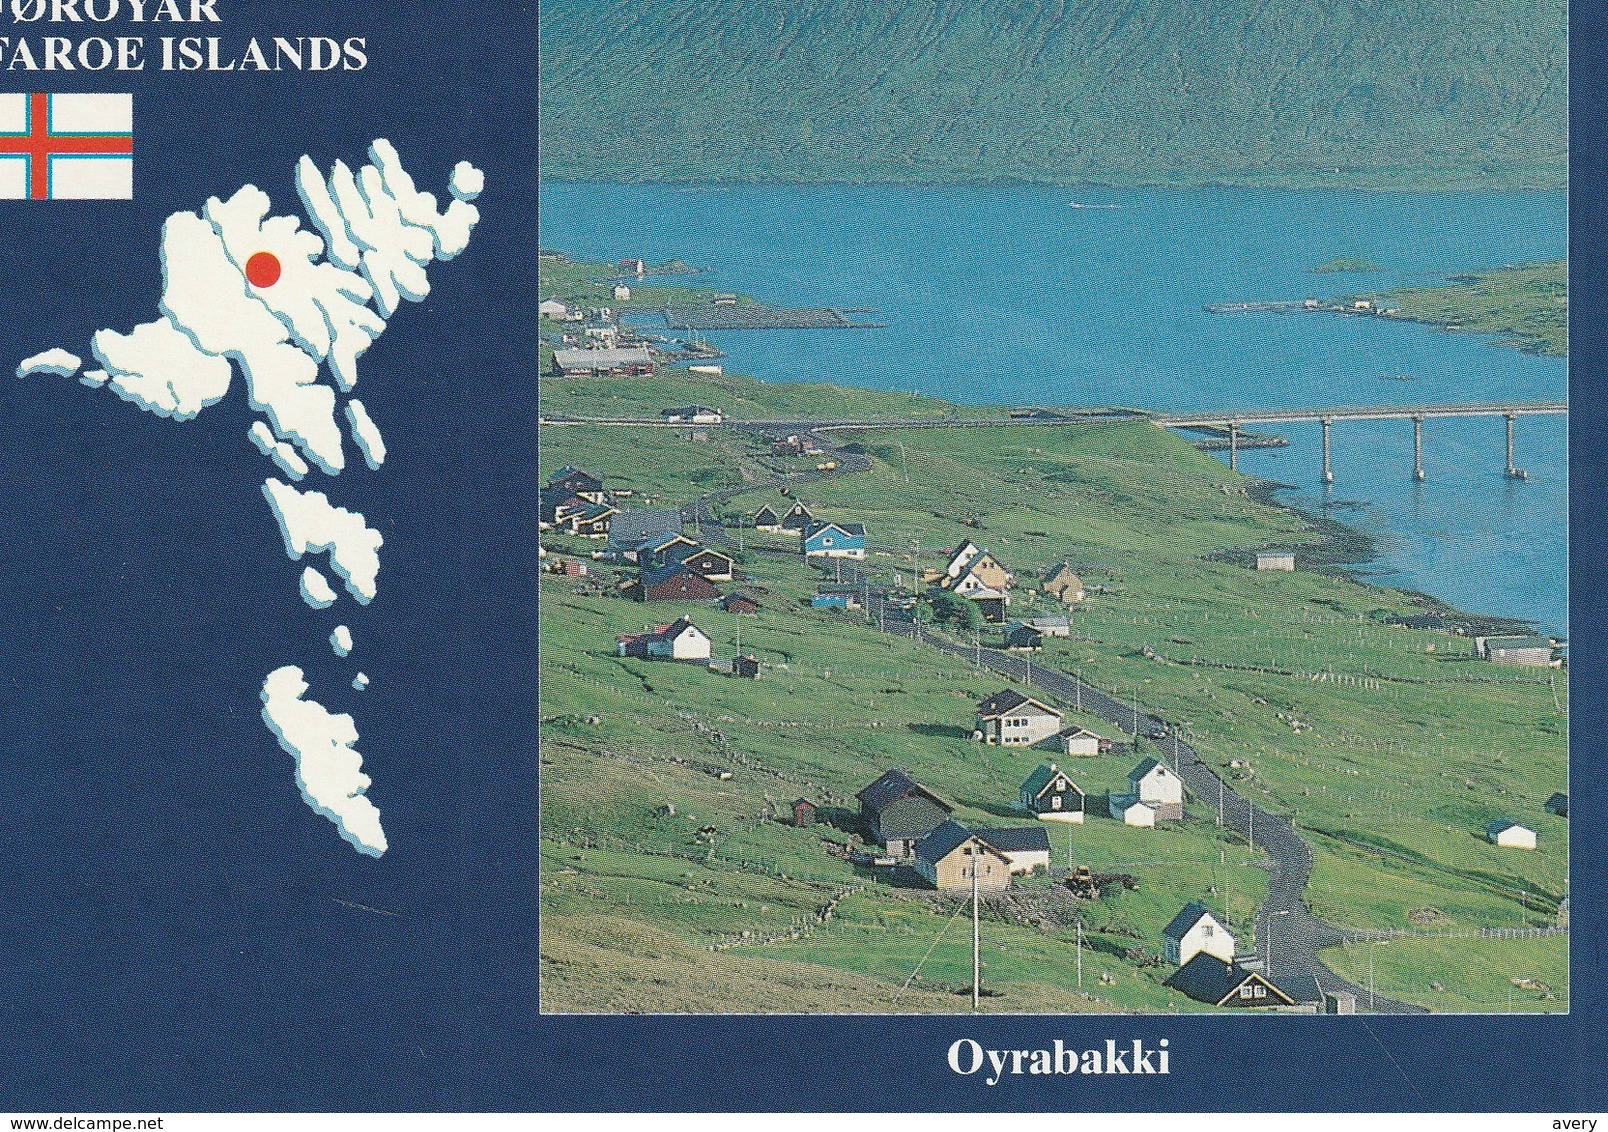 Foroyar  Faroe Islands Oyrabakki - Faroe Islands